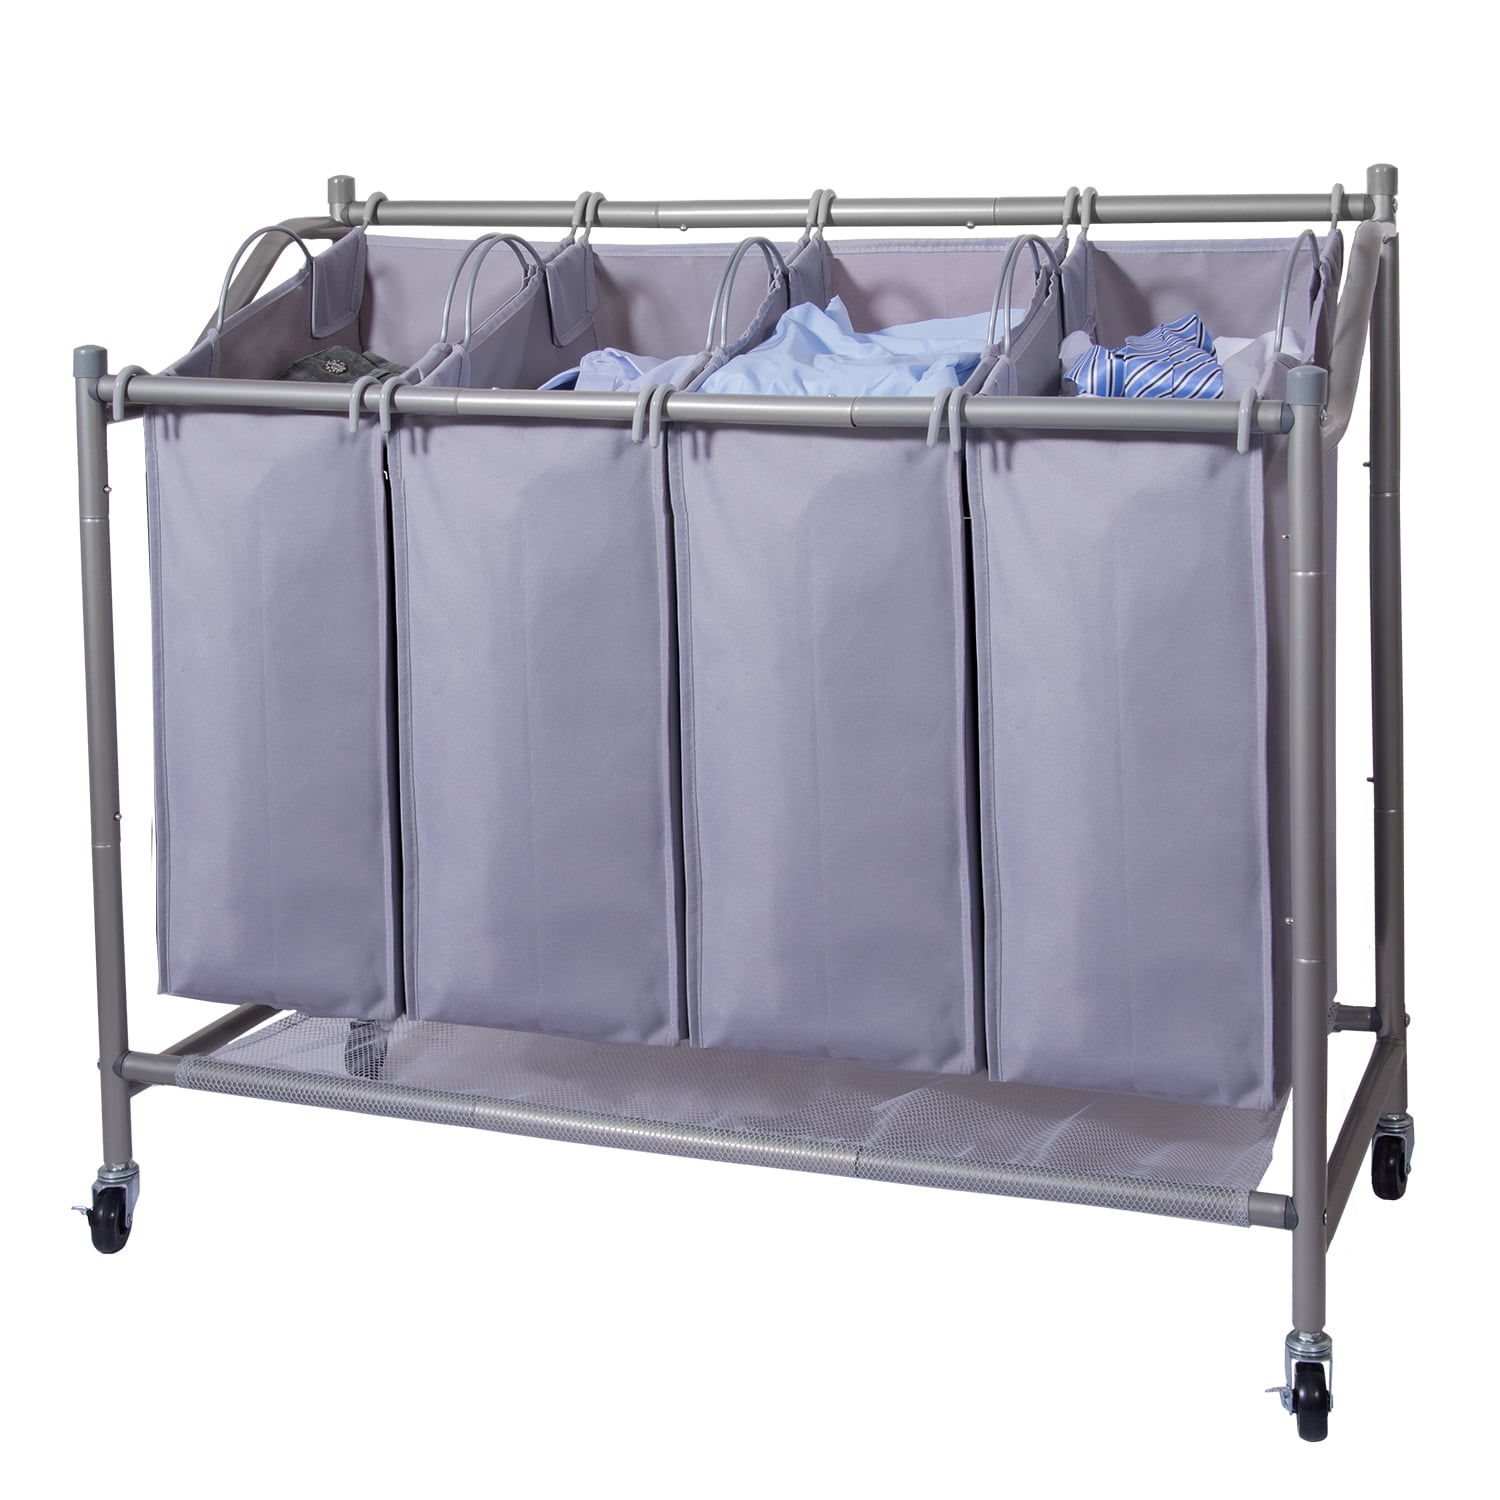 Mllieroo Heavy-Duty 4-Bag Rolling Laundry Sorter Storage Cart with Wheels chromed，Gray